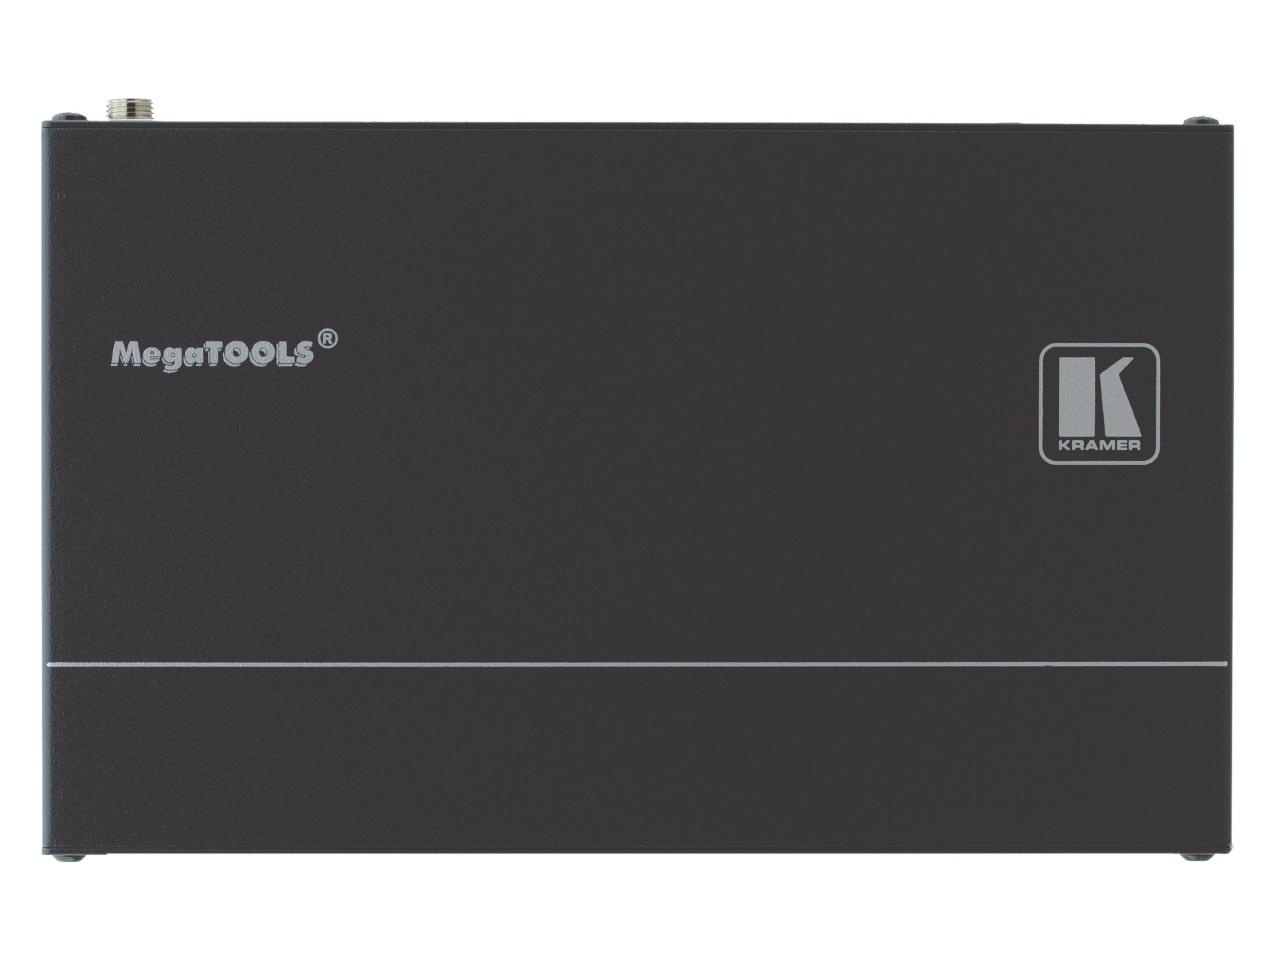 Kramer VS-211UHD Auto UHD/4K HDMI Switch with Remote/Analog Audio Signals